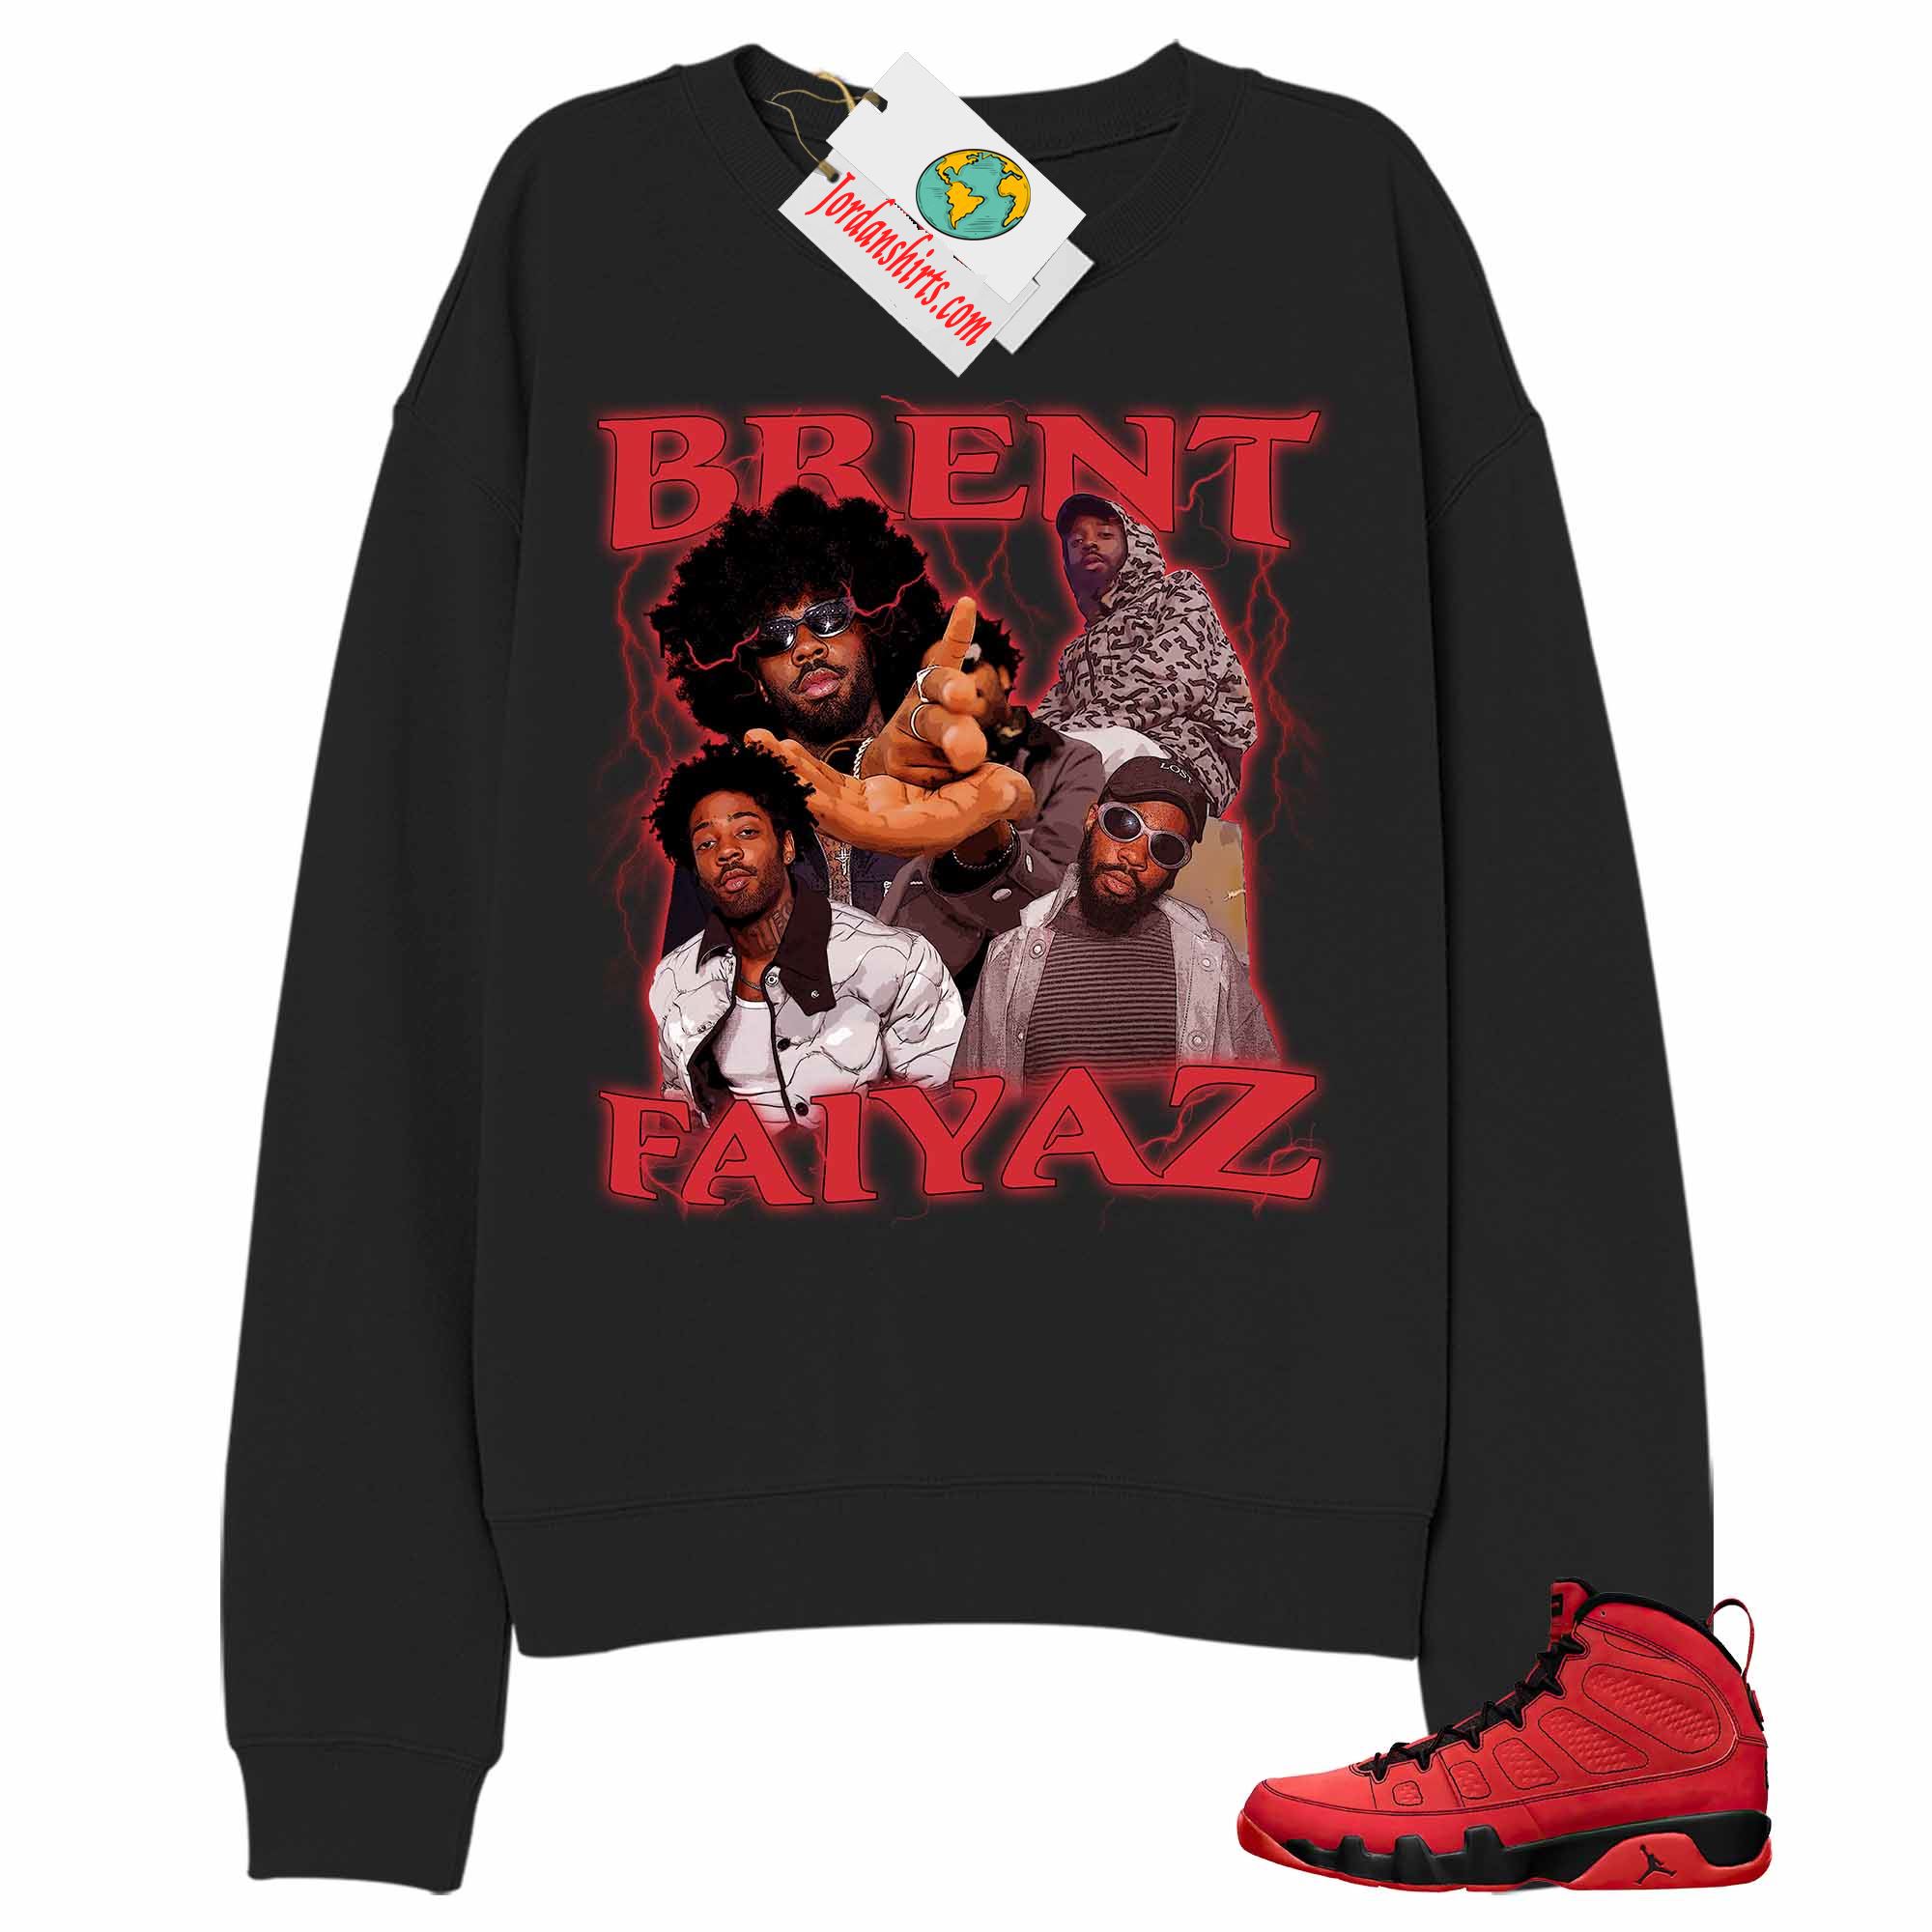 Jordan 9 Sweatshirt, Brent Faiyaz Retro Vintage 90s Hip Hop Raptees Black Sweatshirt Air Jordan 9 Chile Red 9s Plus Size Up To 5xl